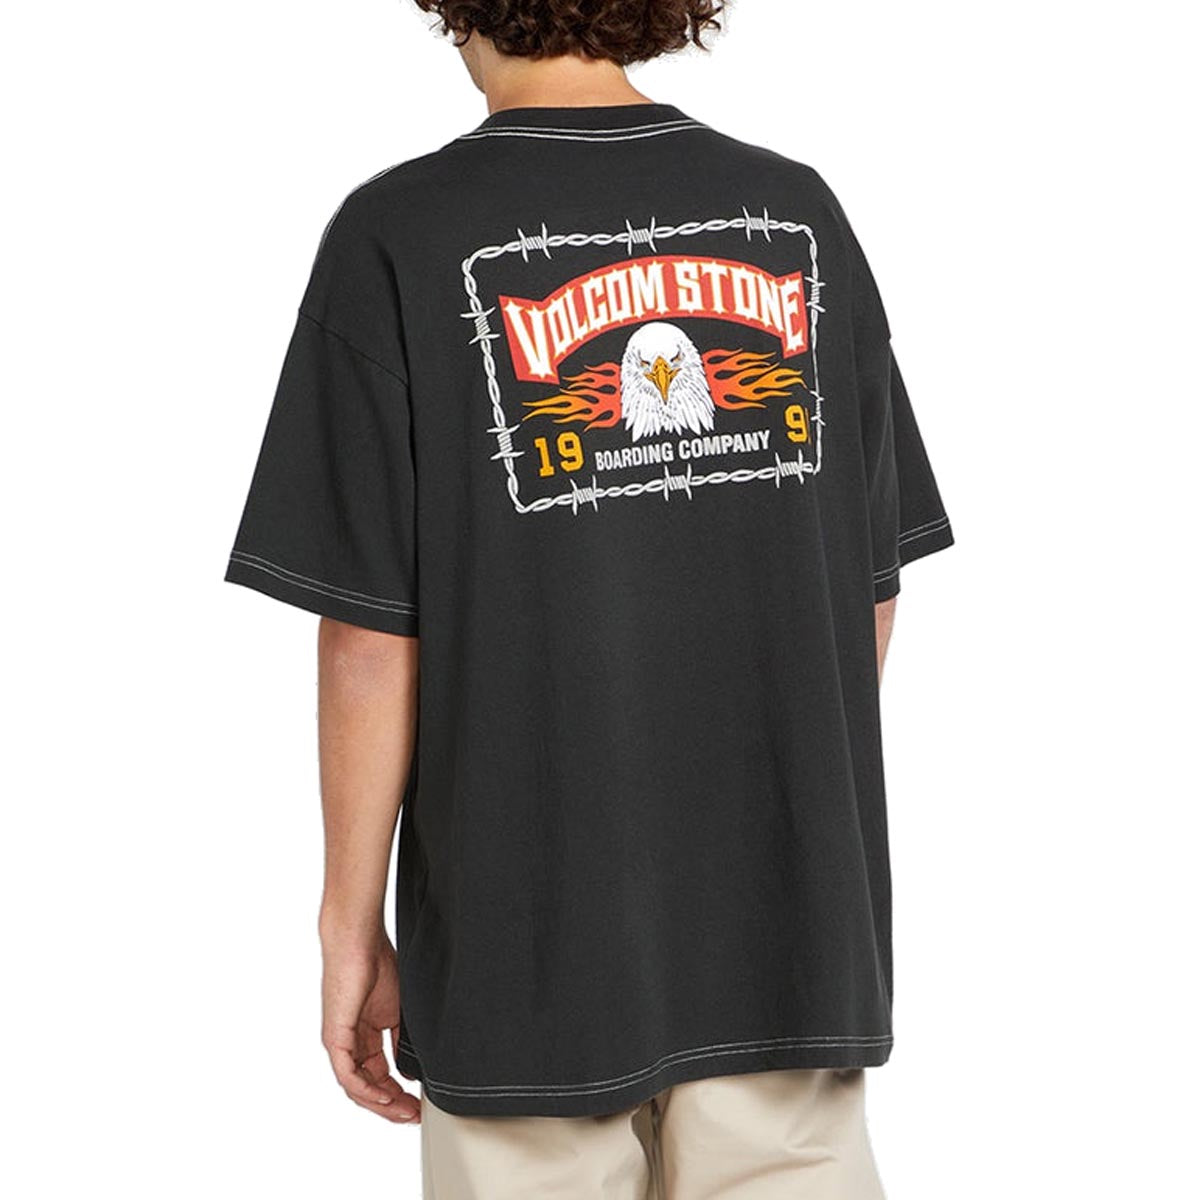 Volcom Barb Stone Long Sleeve T-Shirt - Stealth image 3